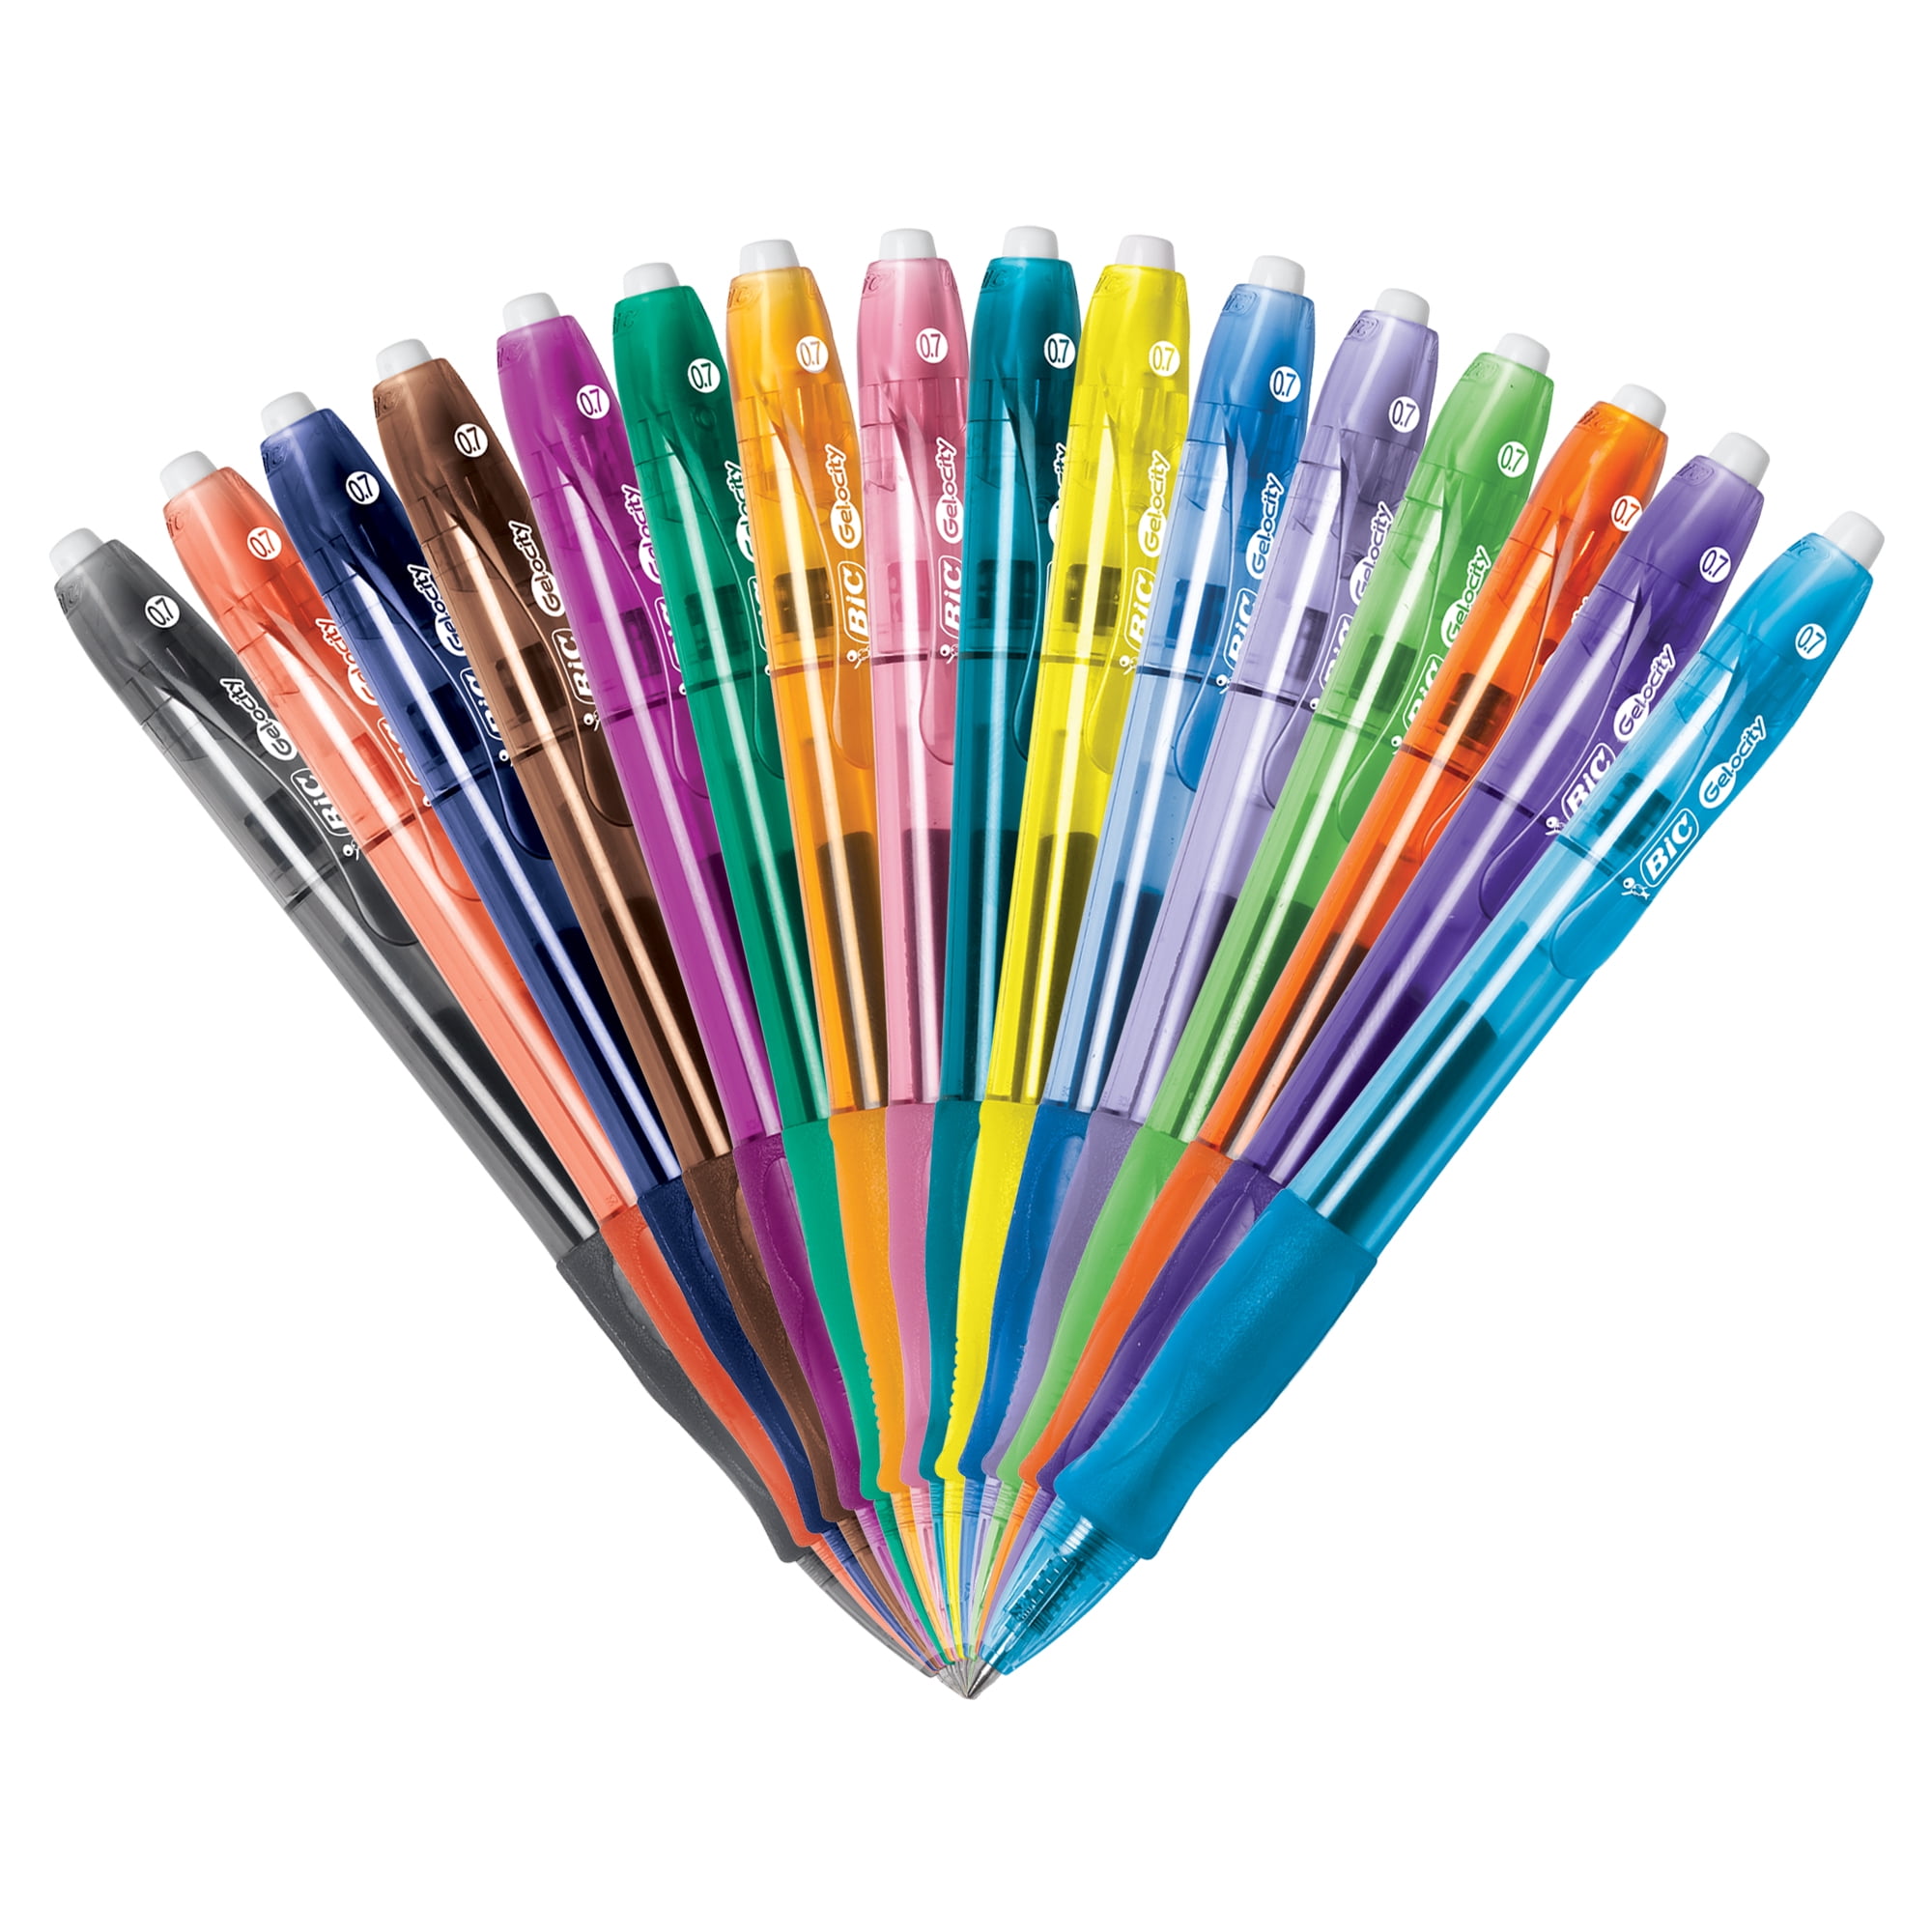 BIC SUPER SMOOTH Gel-ocity gel pens, Bulk Pack Of 24 Ink Pens, 24 Black